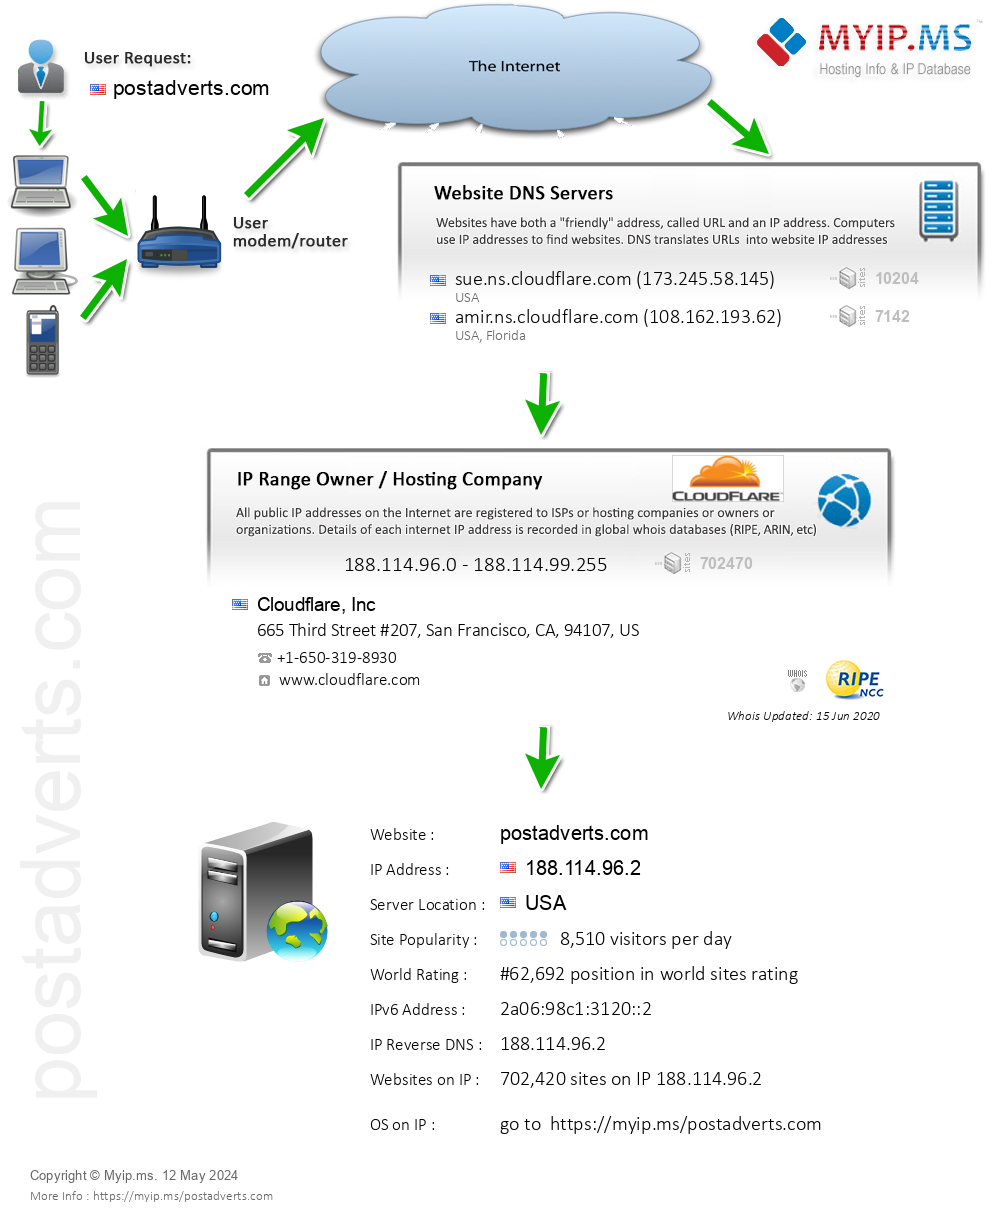 Postadverts.com - Website Hosting Visual IP Diagram